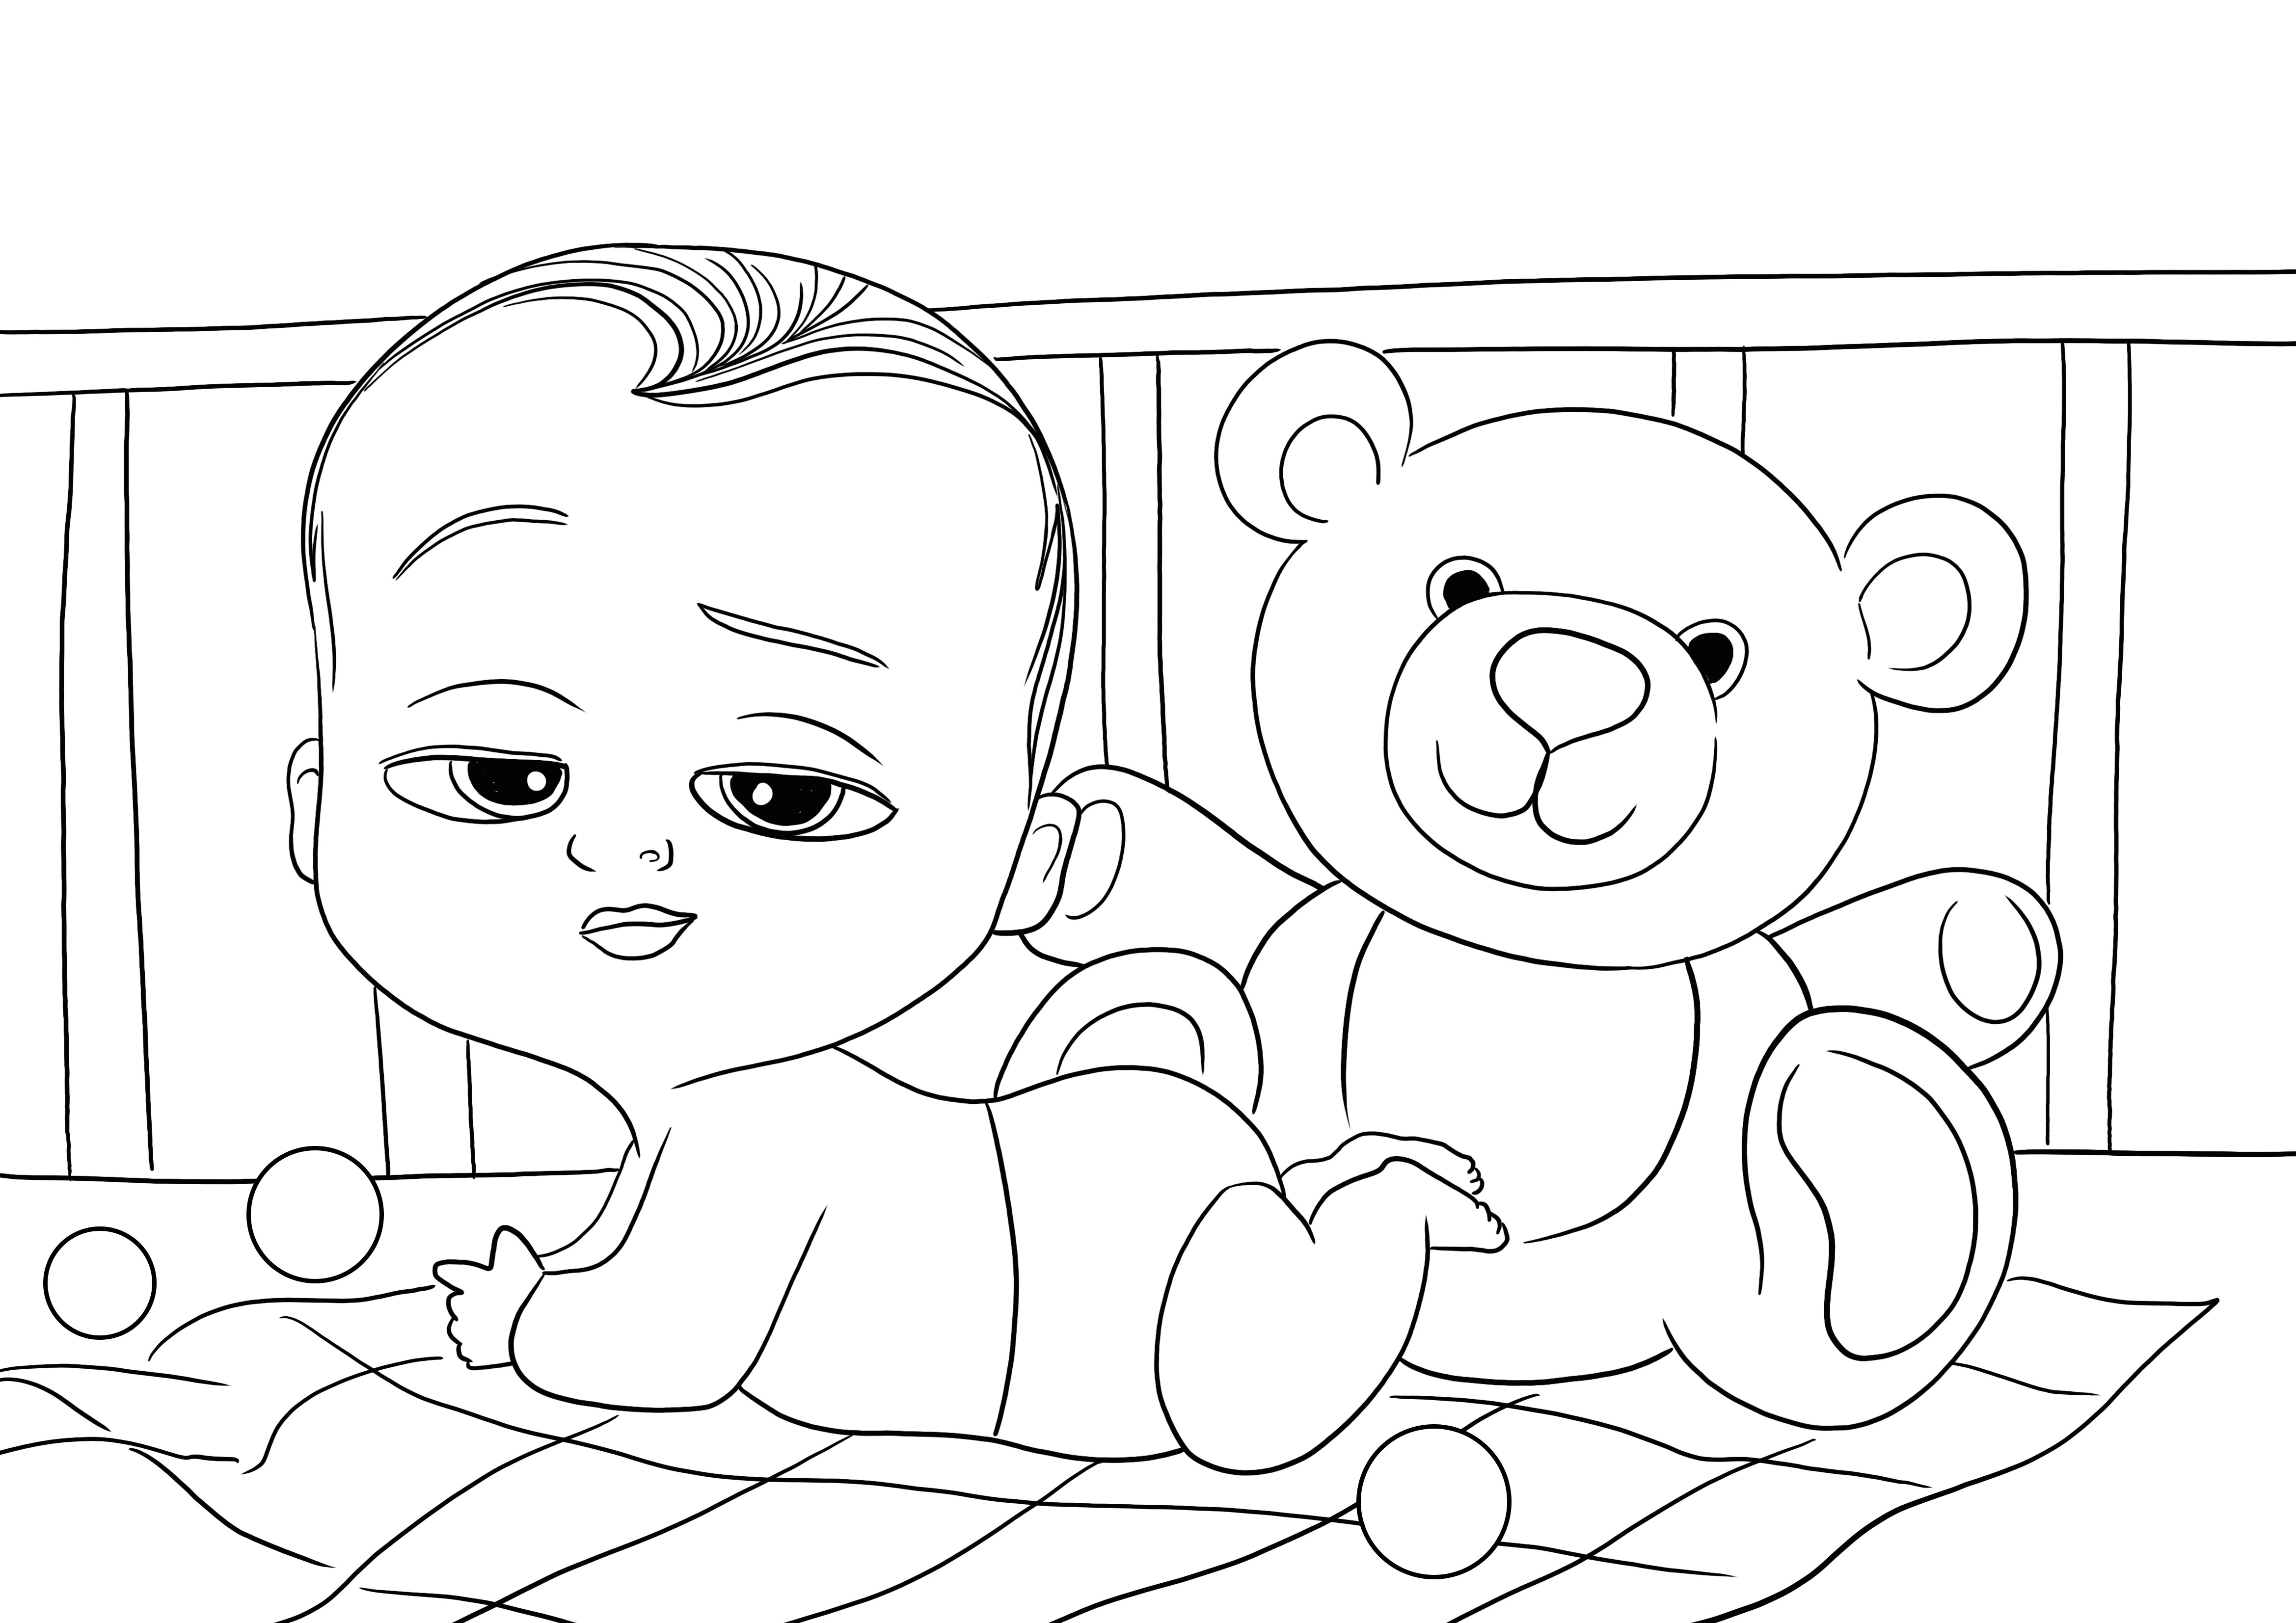 Do pobrania za darmo kolorowanka Baby Boss i Teddy Bear do pokolorowania